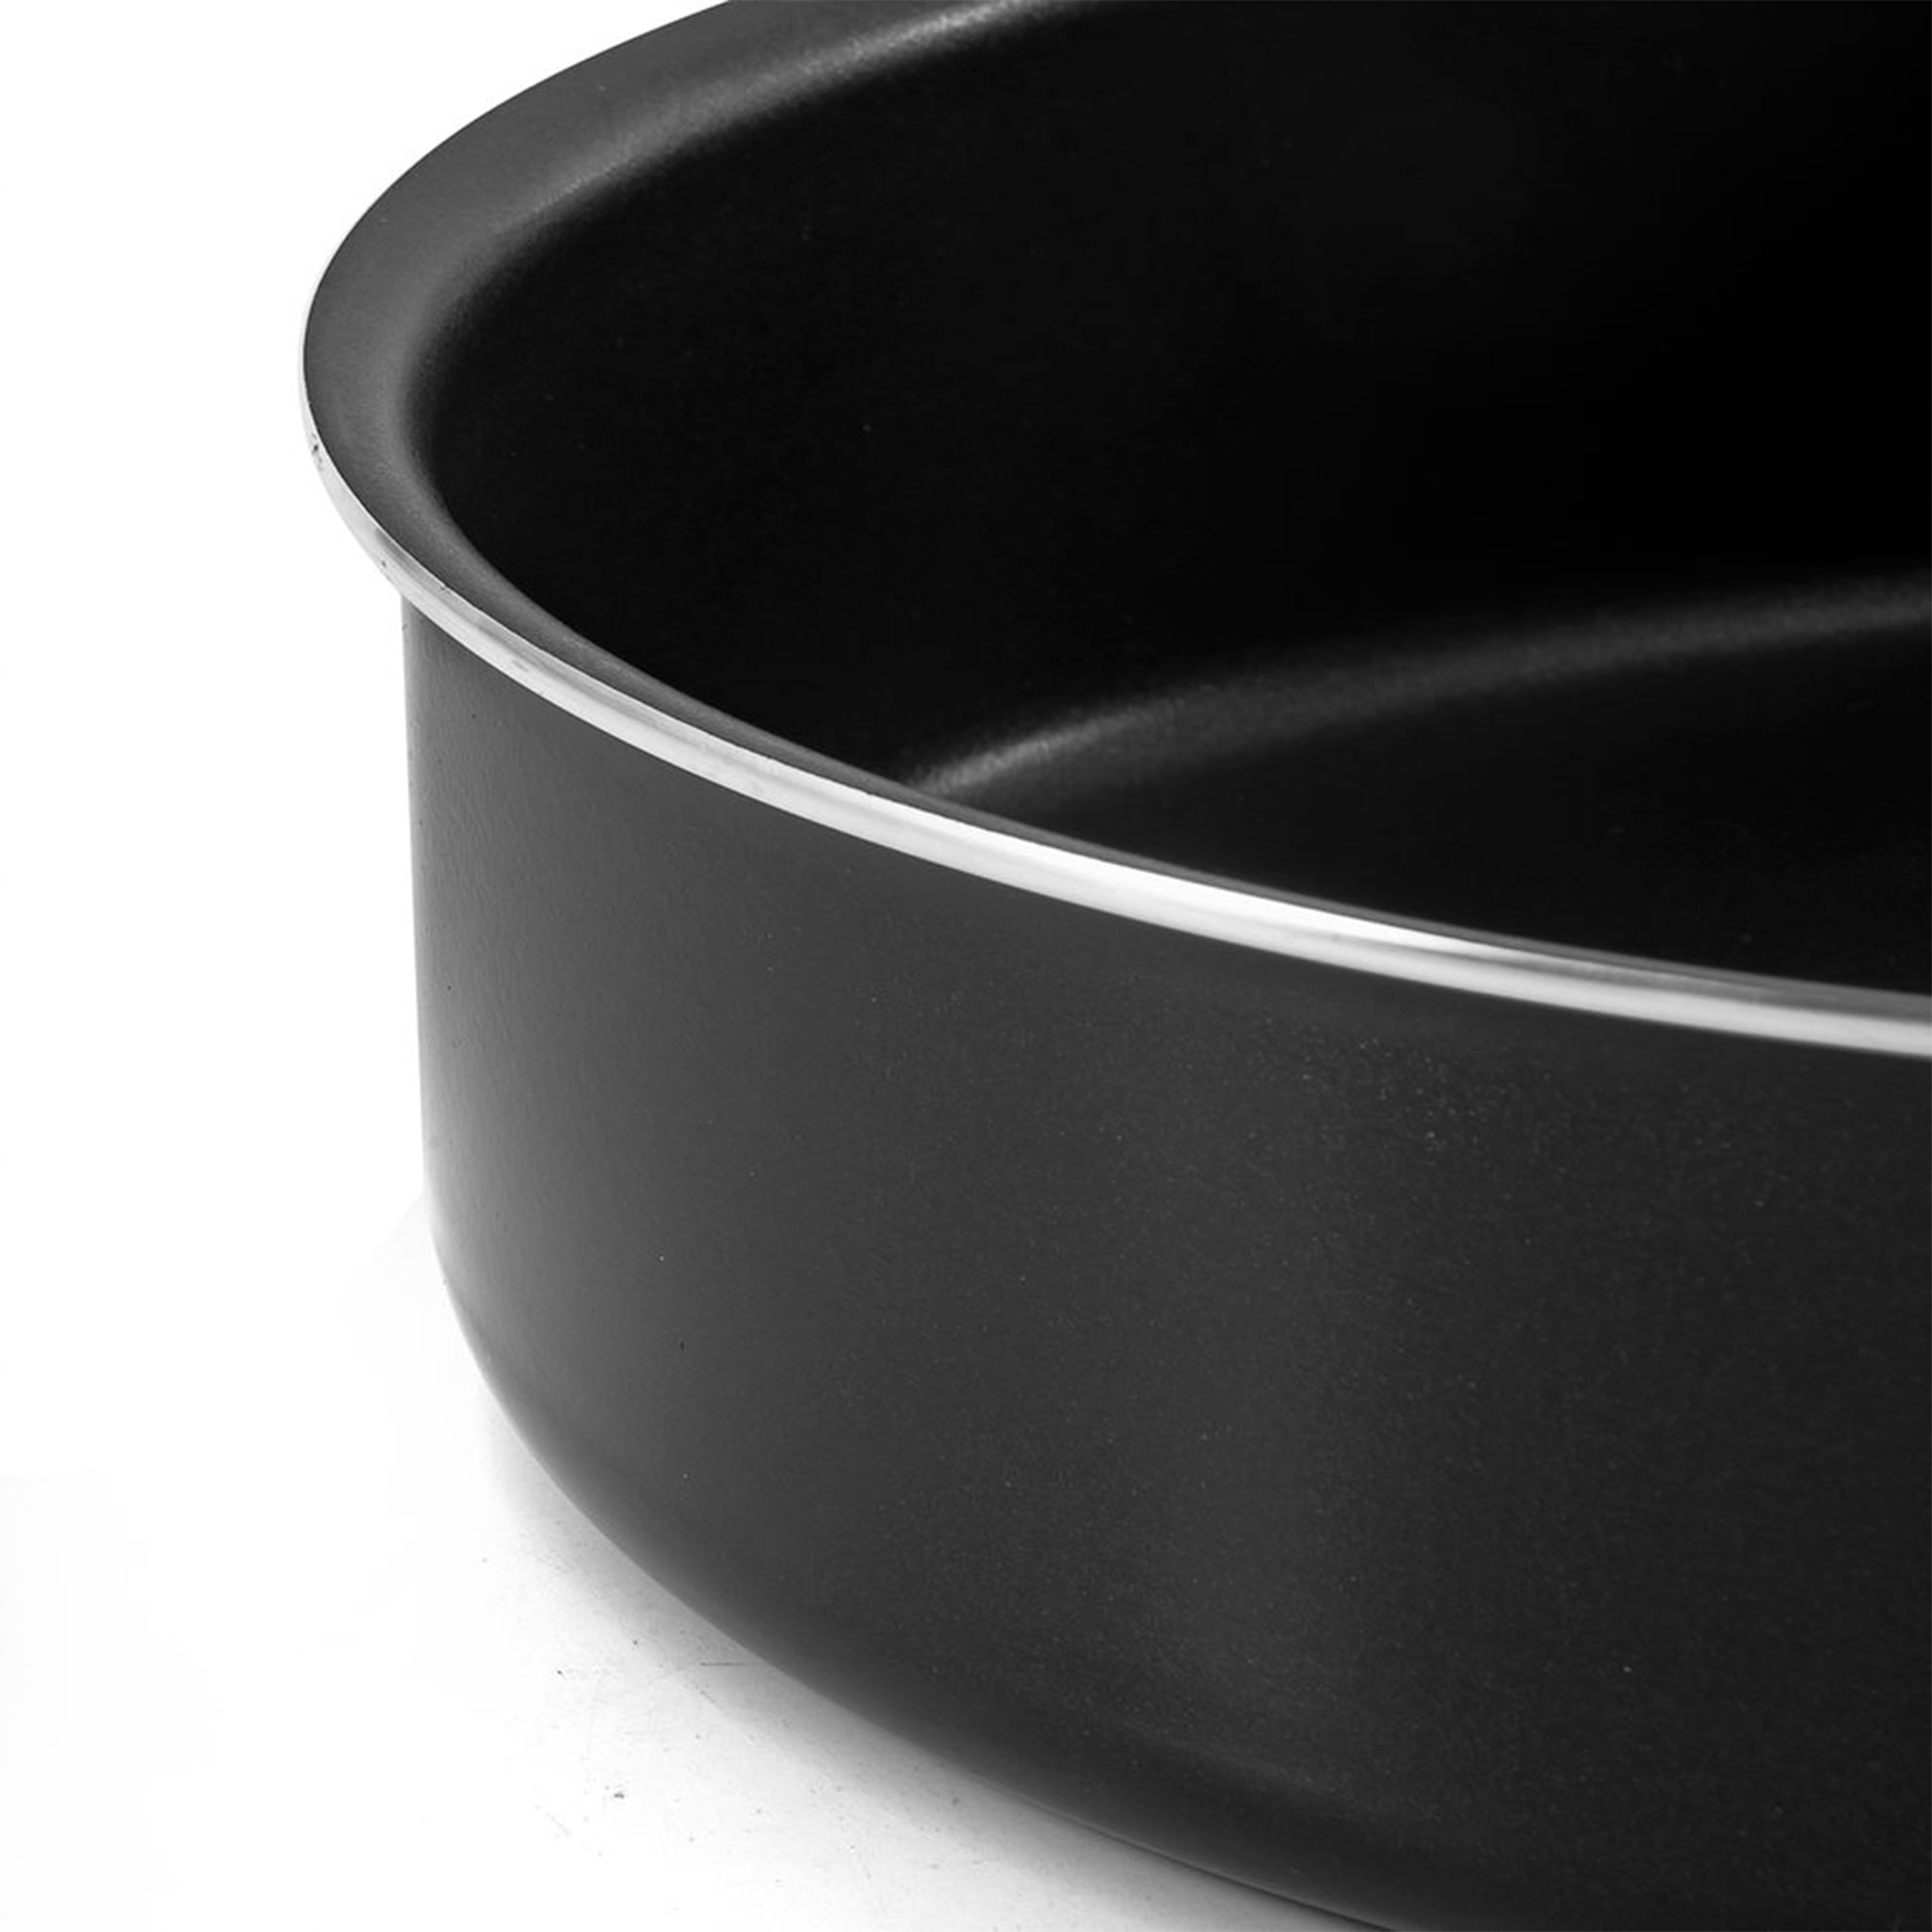 MasterPan Designer Series Non-Stick Cast Aluminum Saute Pan with Glass Lid, 11 - Black